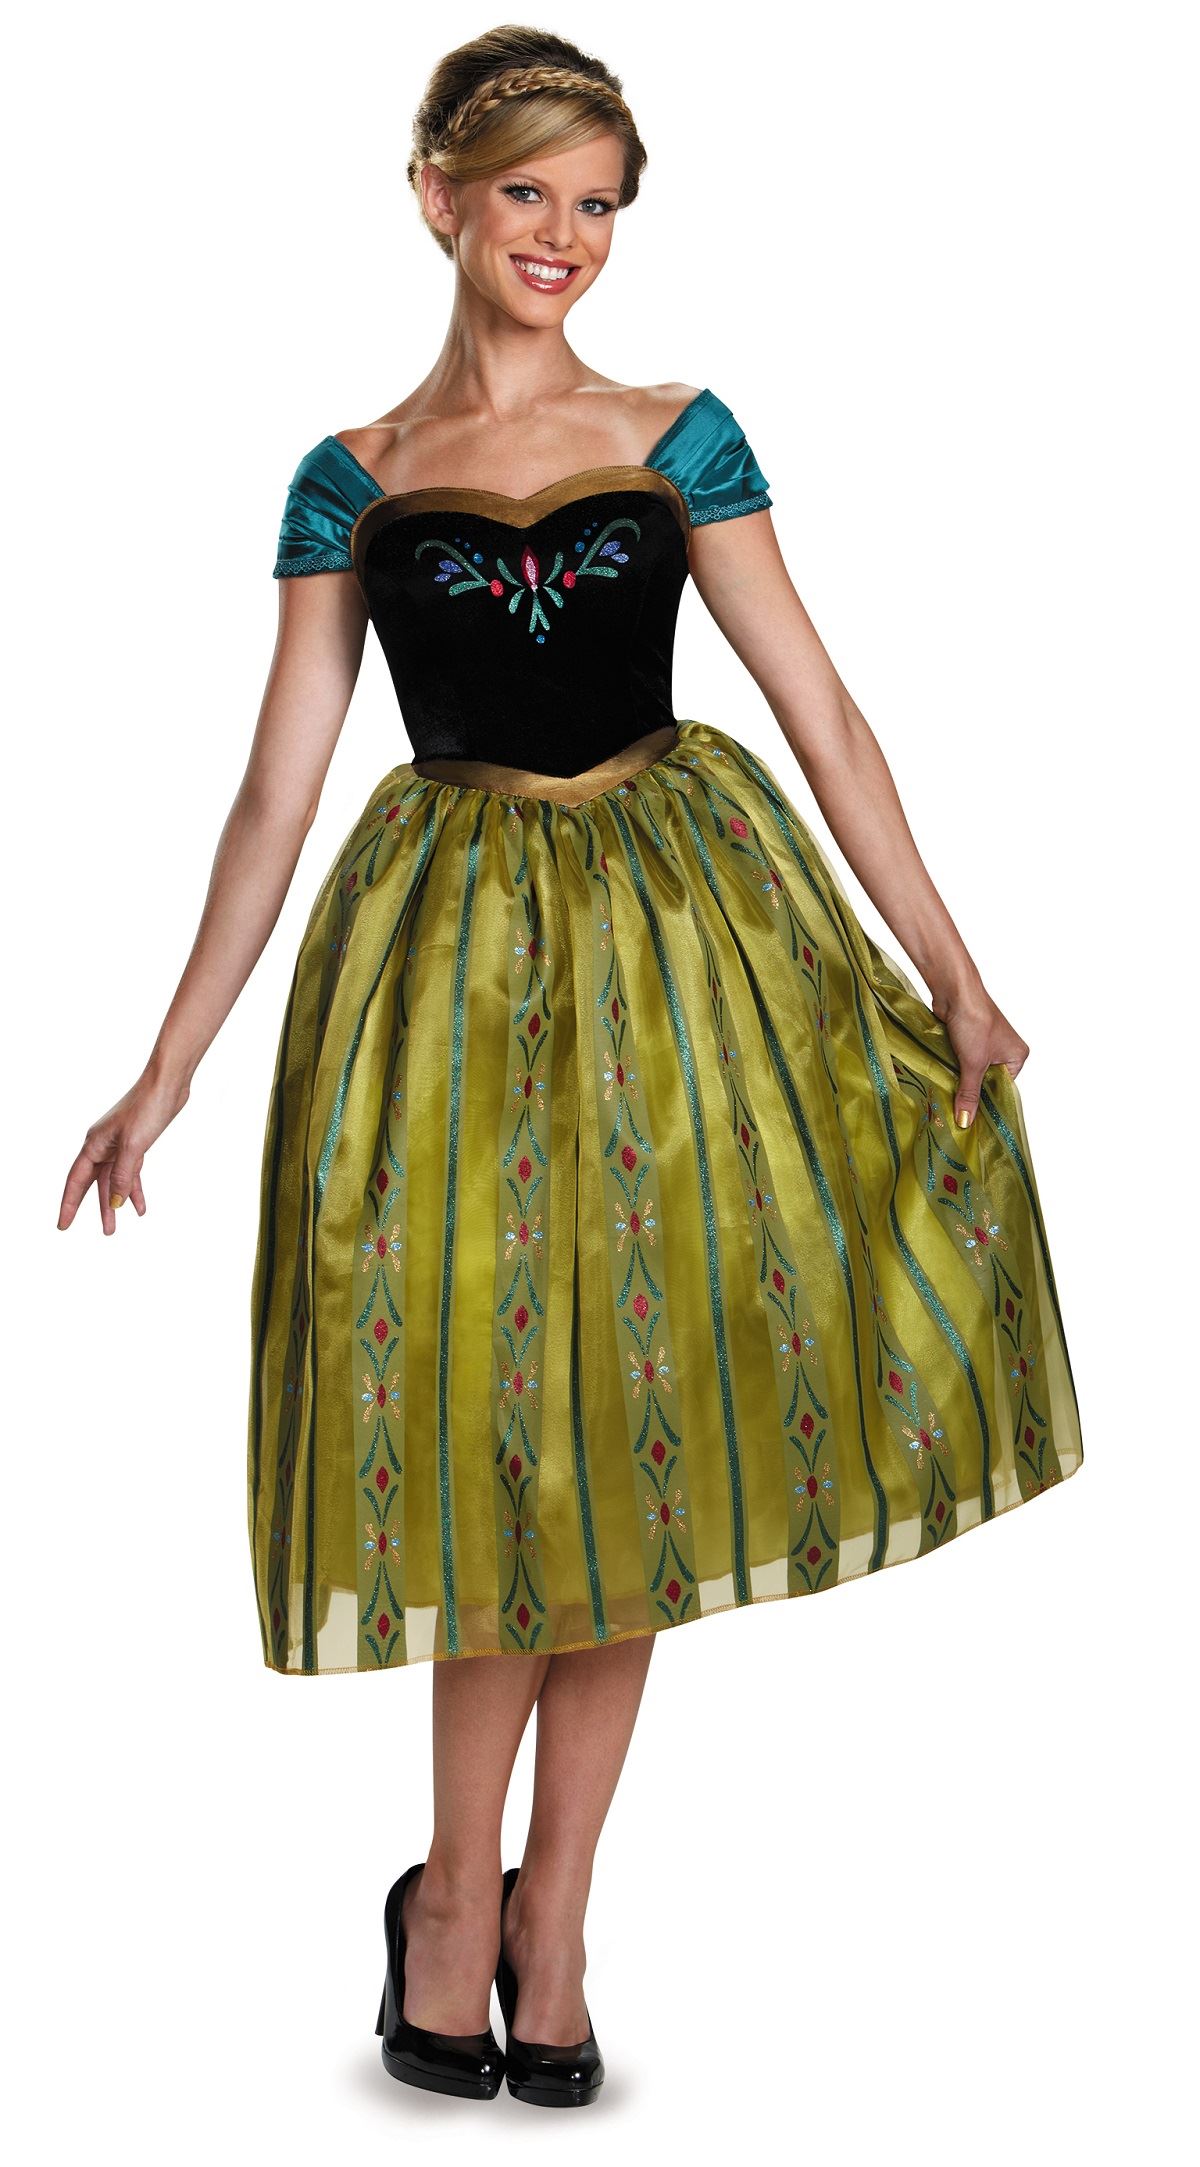 Adult Anna Disney Princess Woman Costume 53.99 The Costume Land